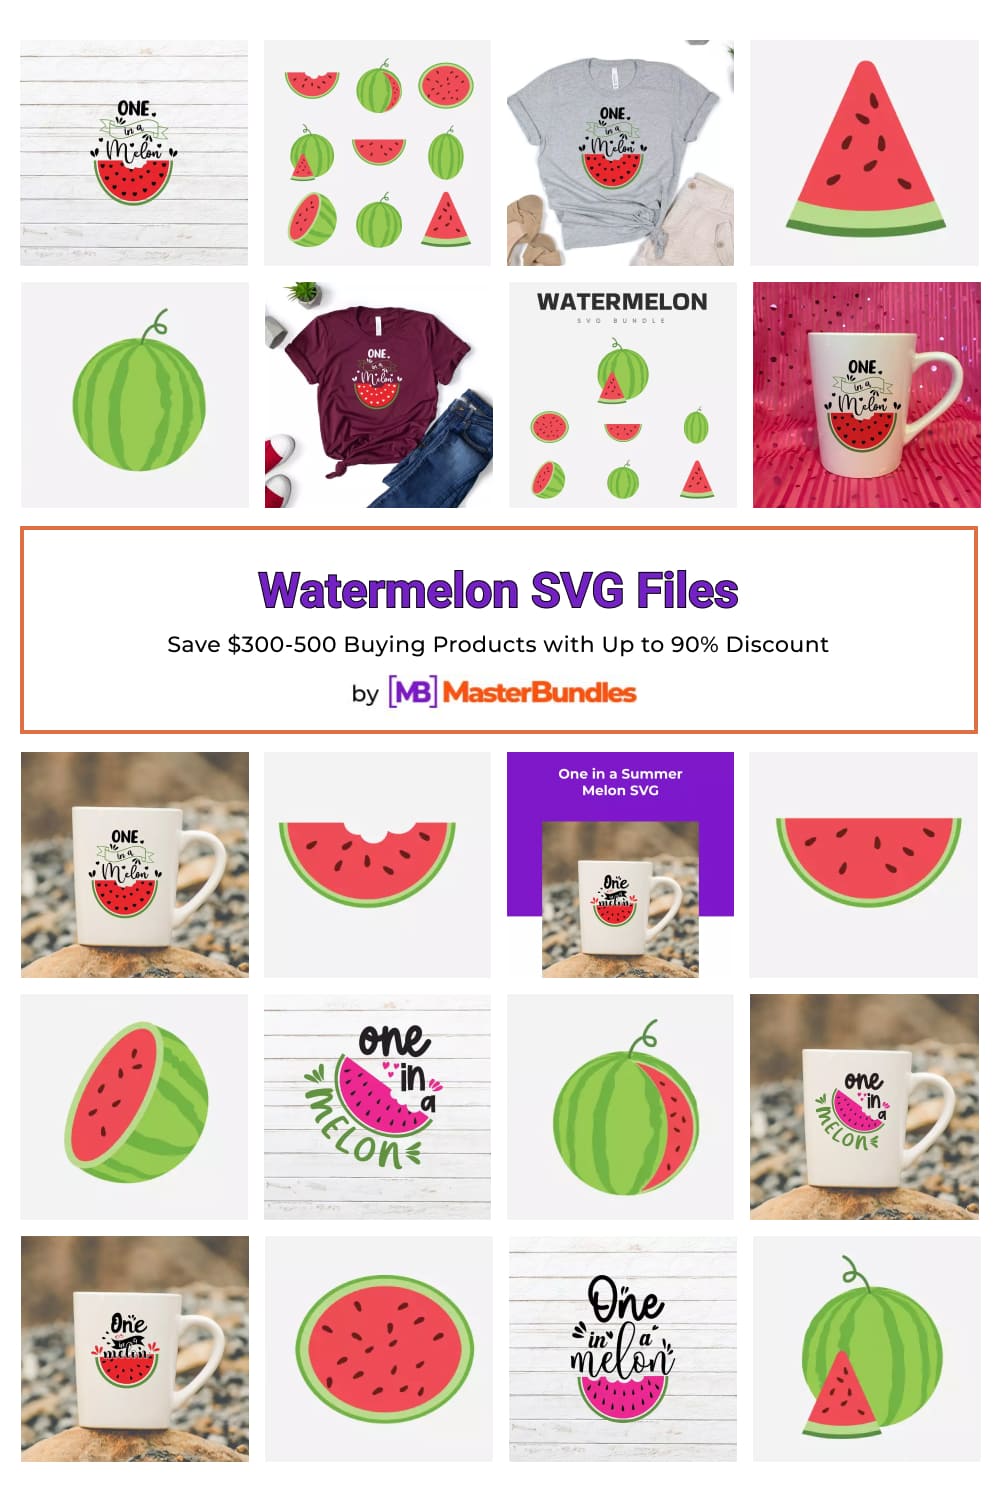 Watermelon SVG Files for Pinterest.